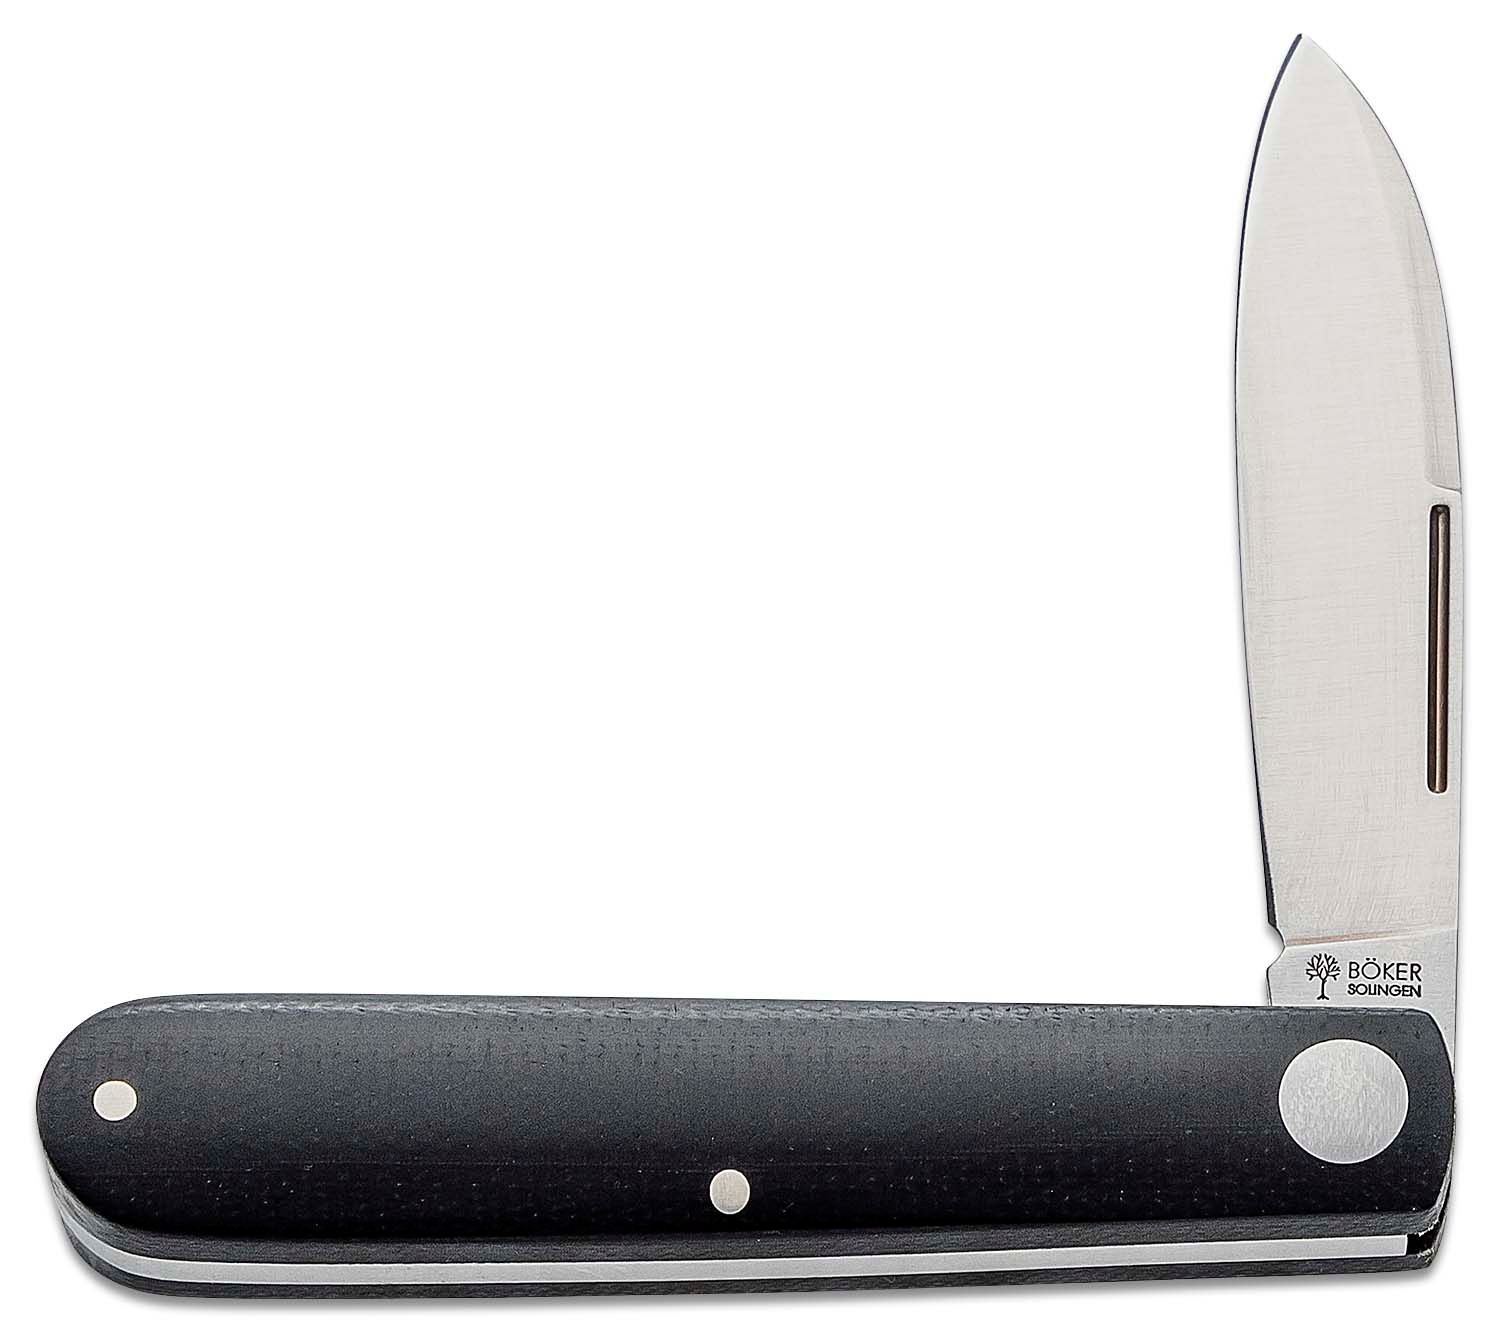 Spearpoint 'Gothic' Pocket Knife